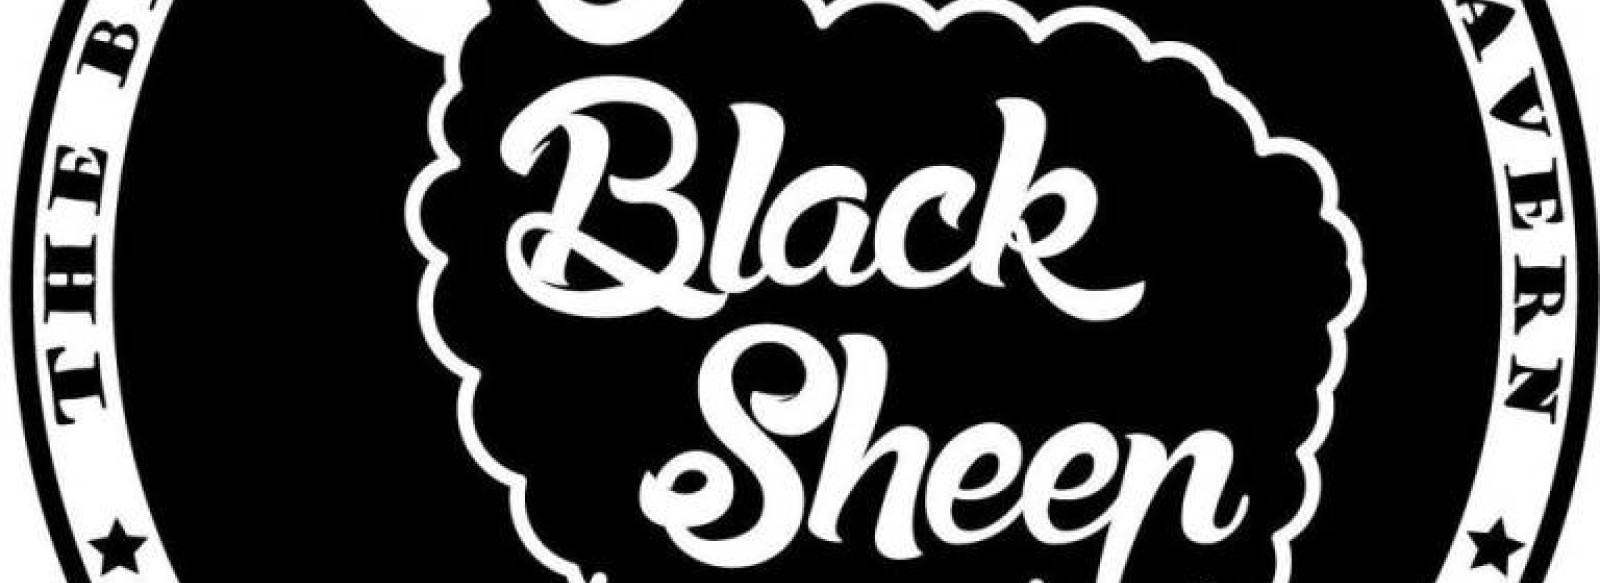 THE BLACK SHEEP TAVERN